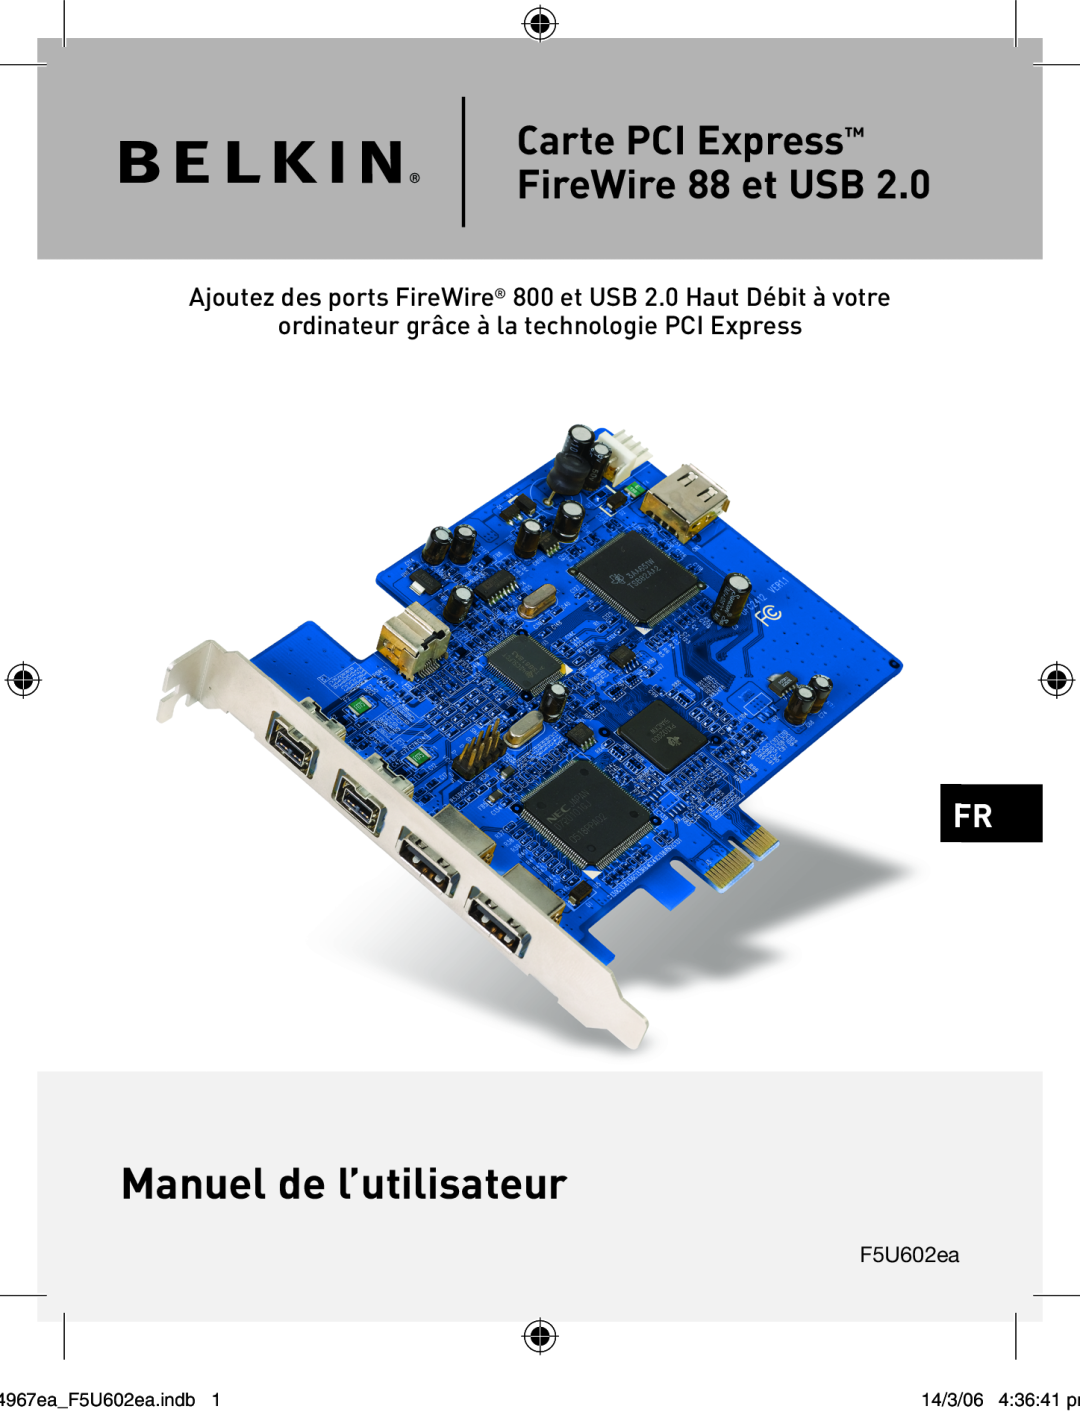 Belkin F5U602EA Manuel de l’utilisateur, Carte PCI Express FireWire 88 et USB, 4967eaF5U602ea.indb, 14/3/06 43641 pm 